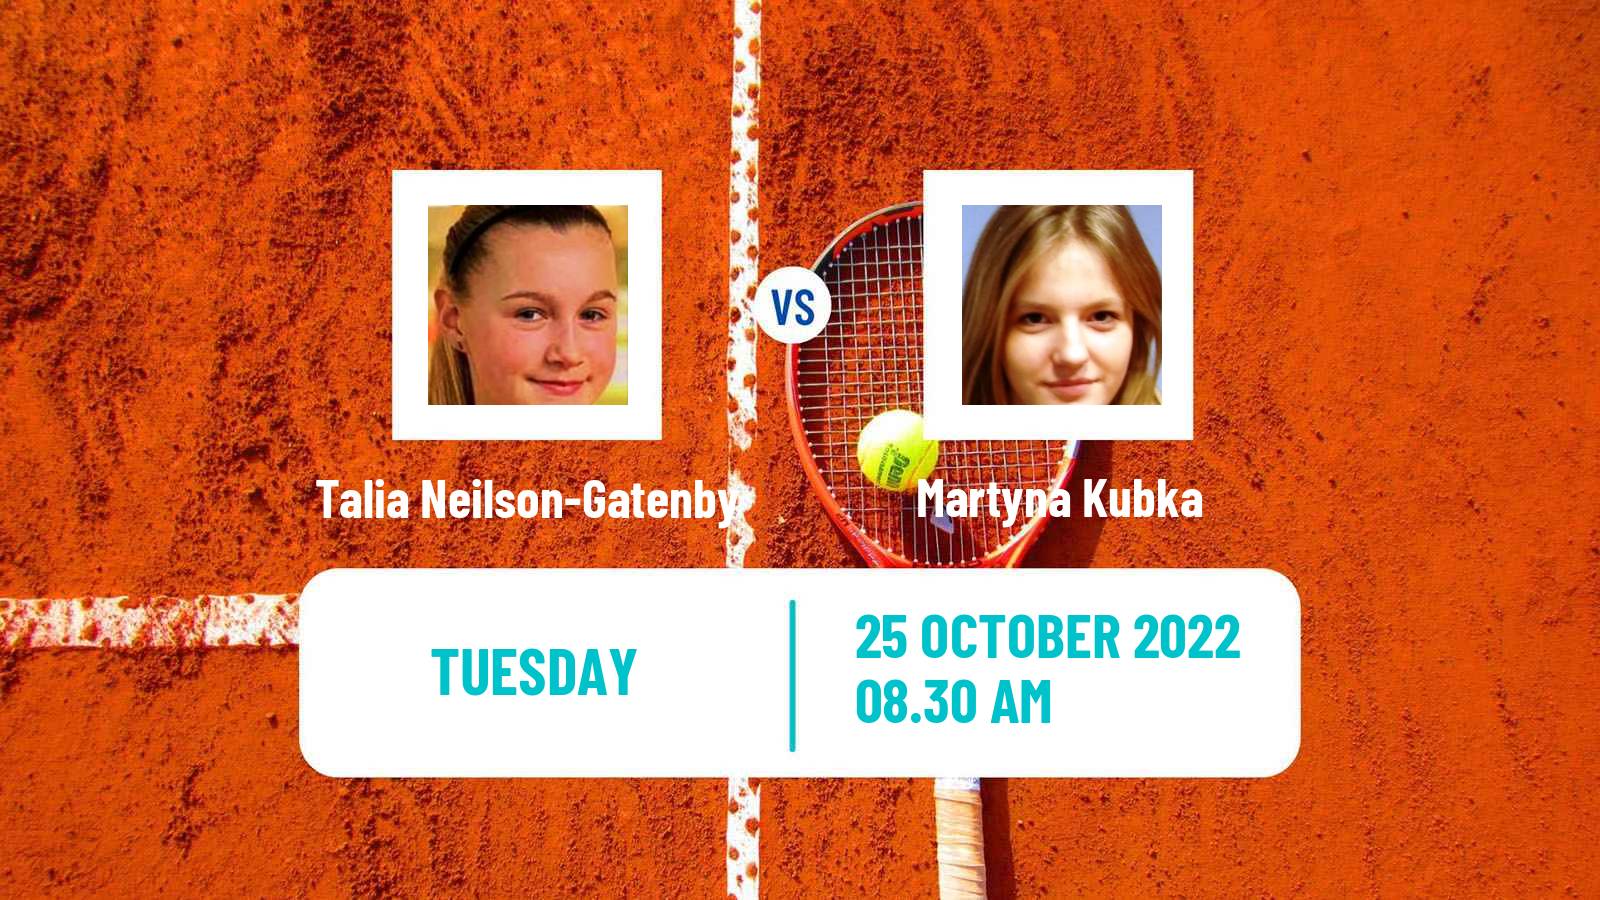 Tennis ITF Tournaments Talia Neilson-Gatenby - Martyna Kubka